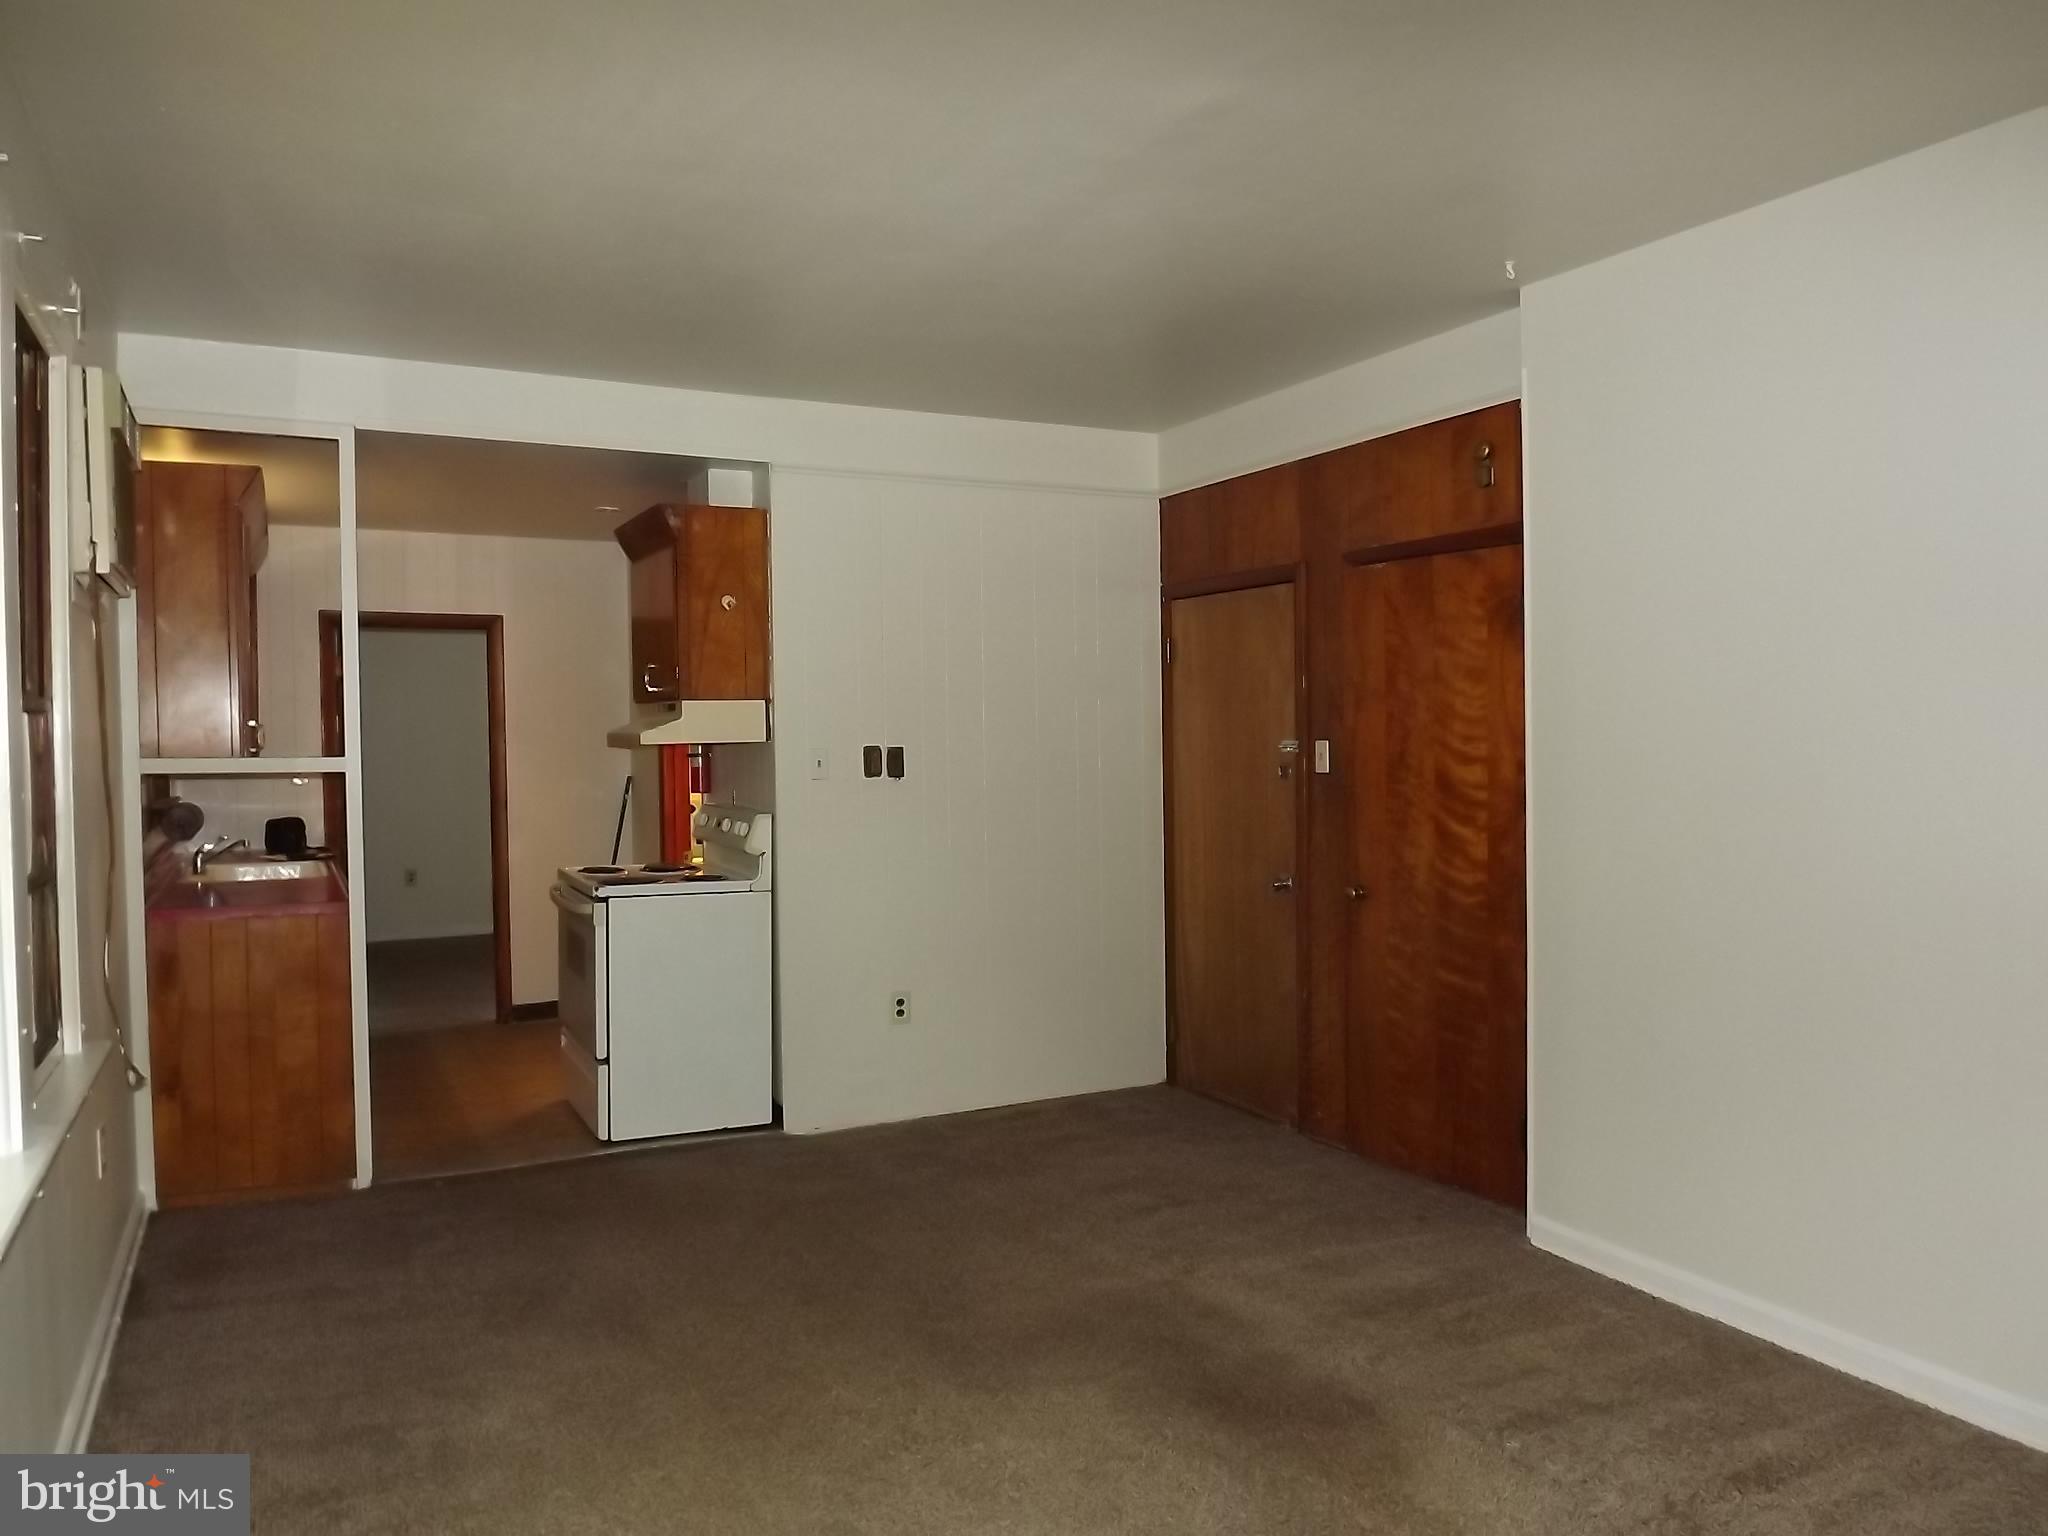 an empty room with closet and wooden door